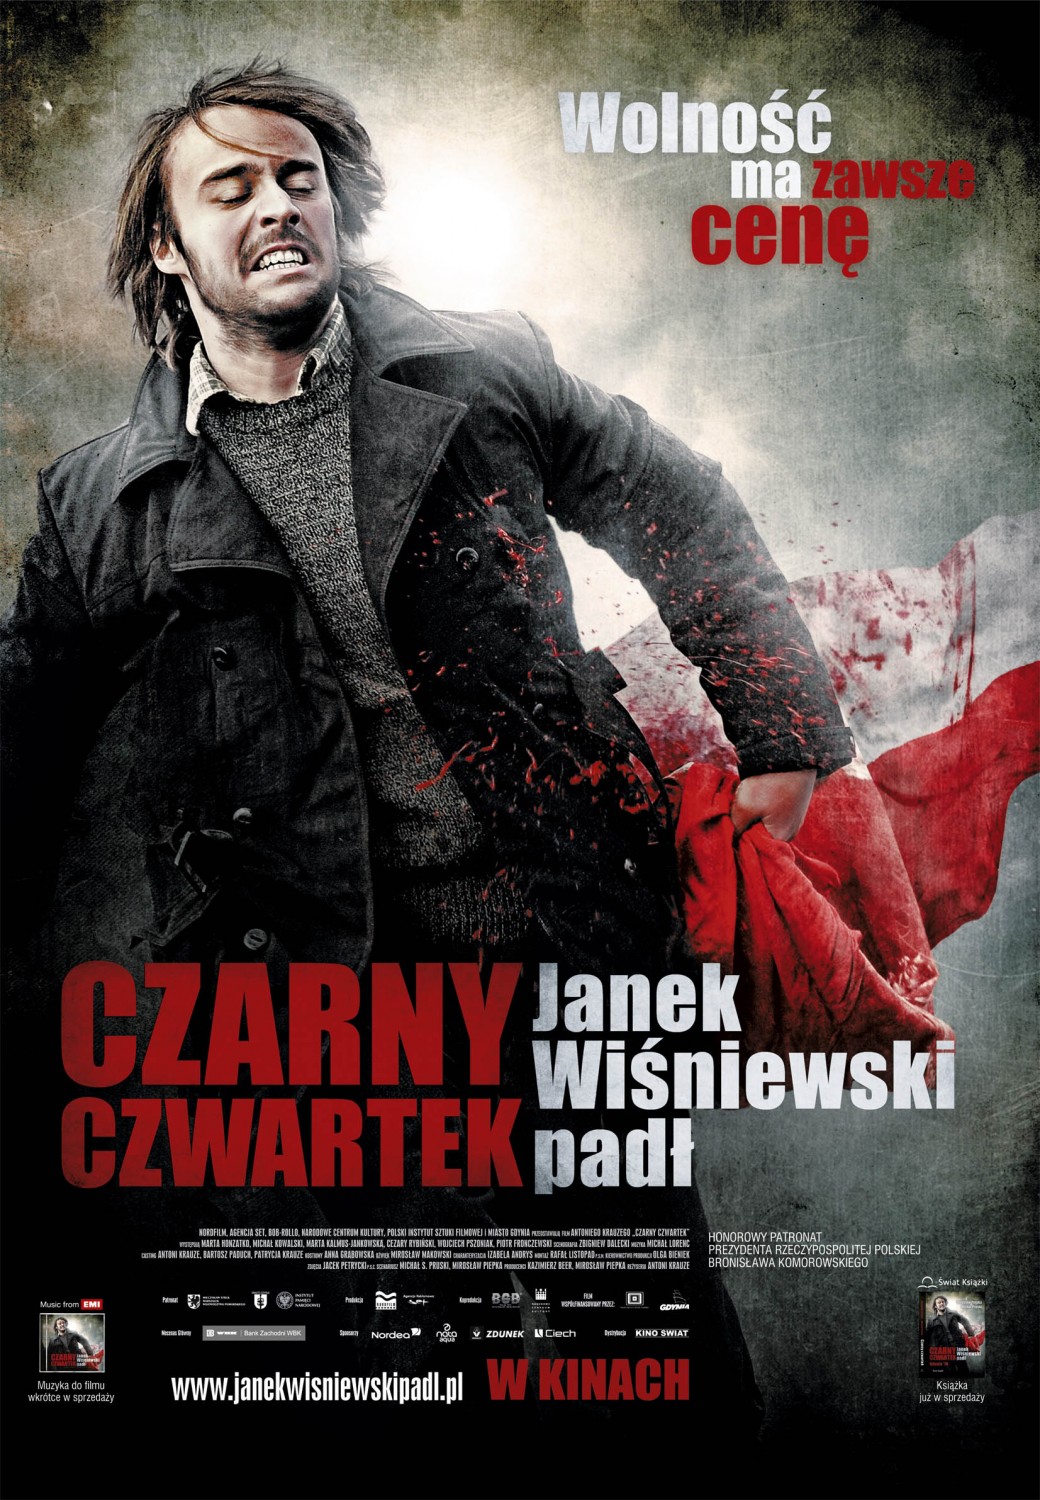 Extra Large Movie Poster Image for Czarny czwartek 